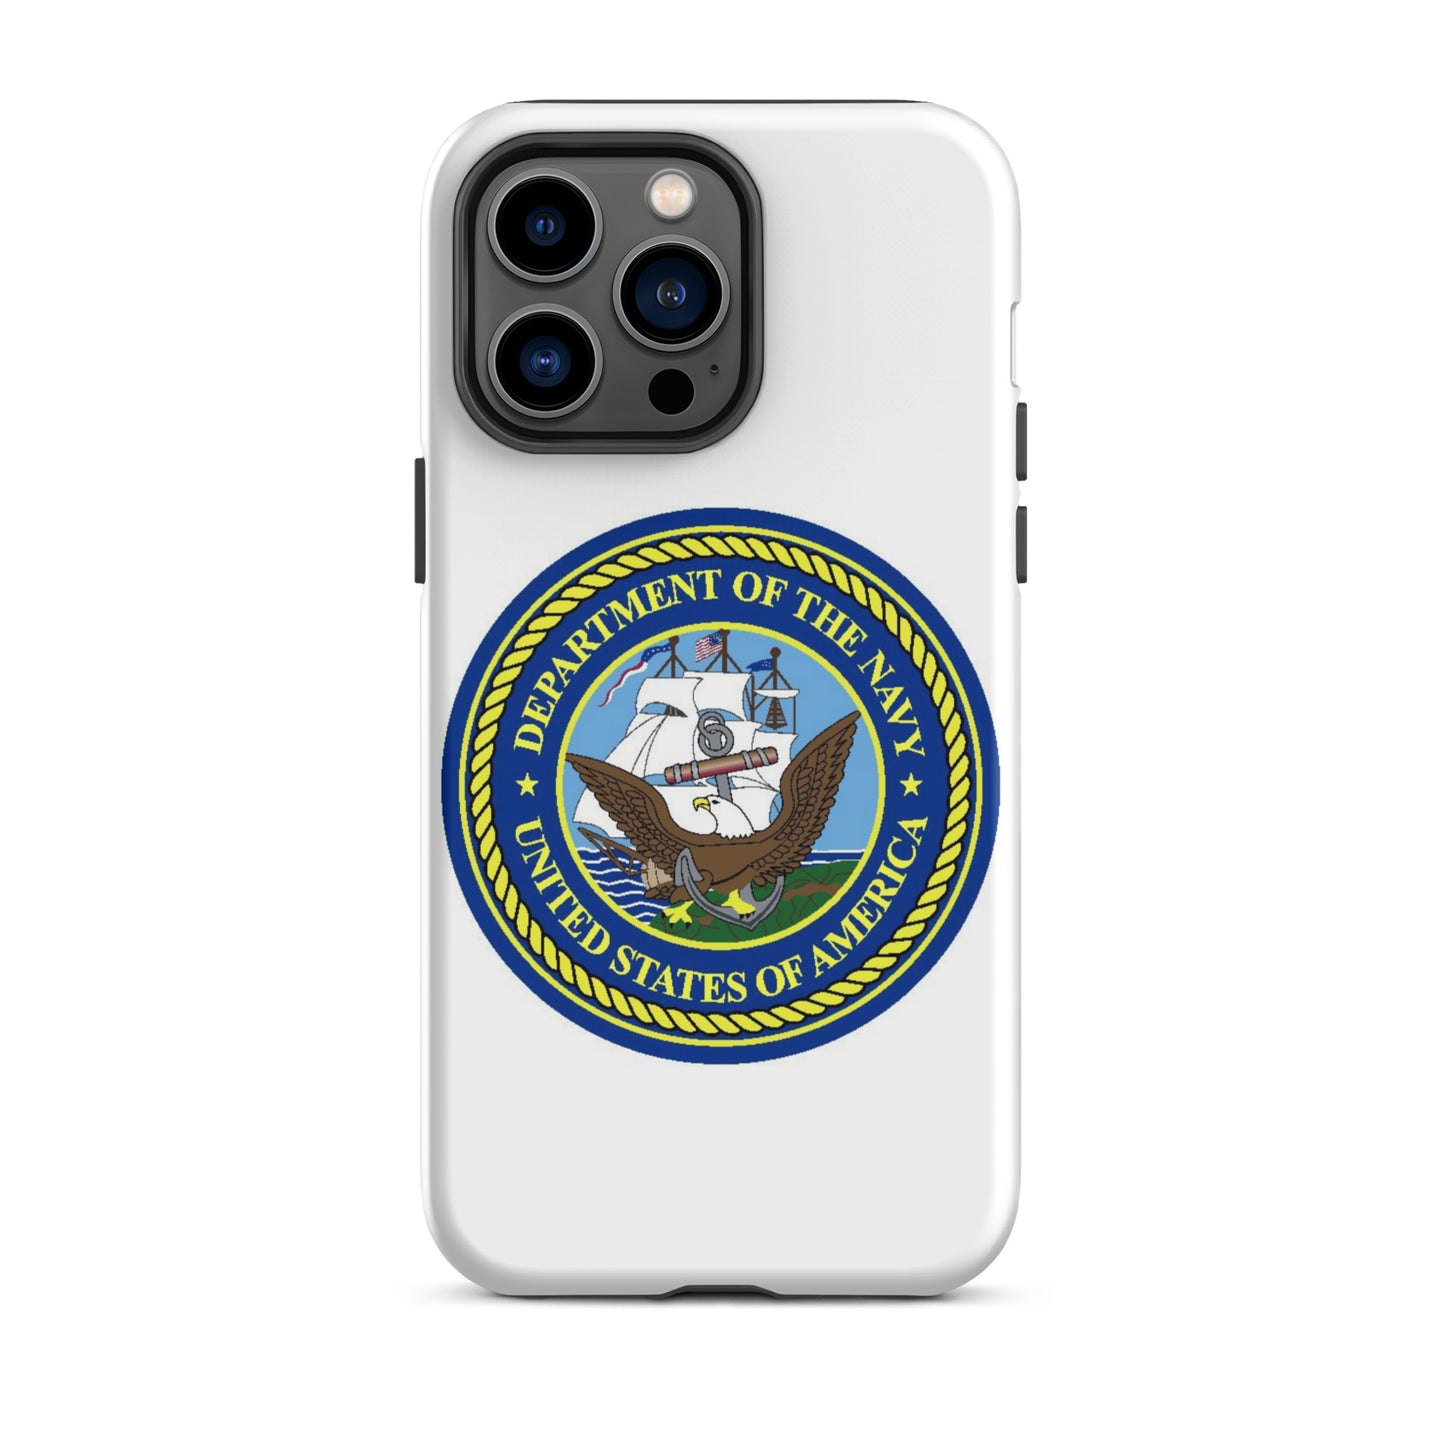 Navy iPhone case